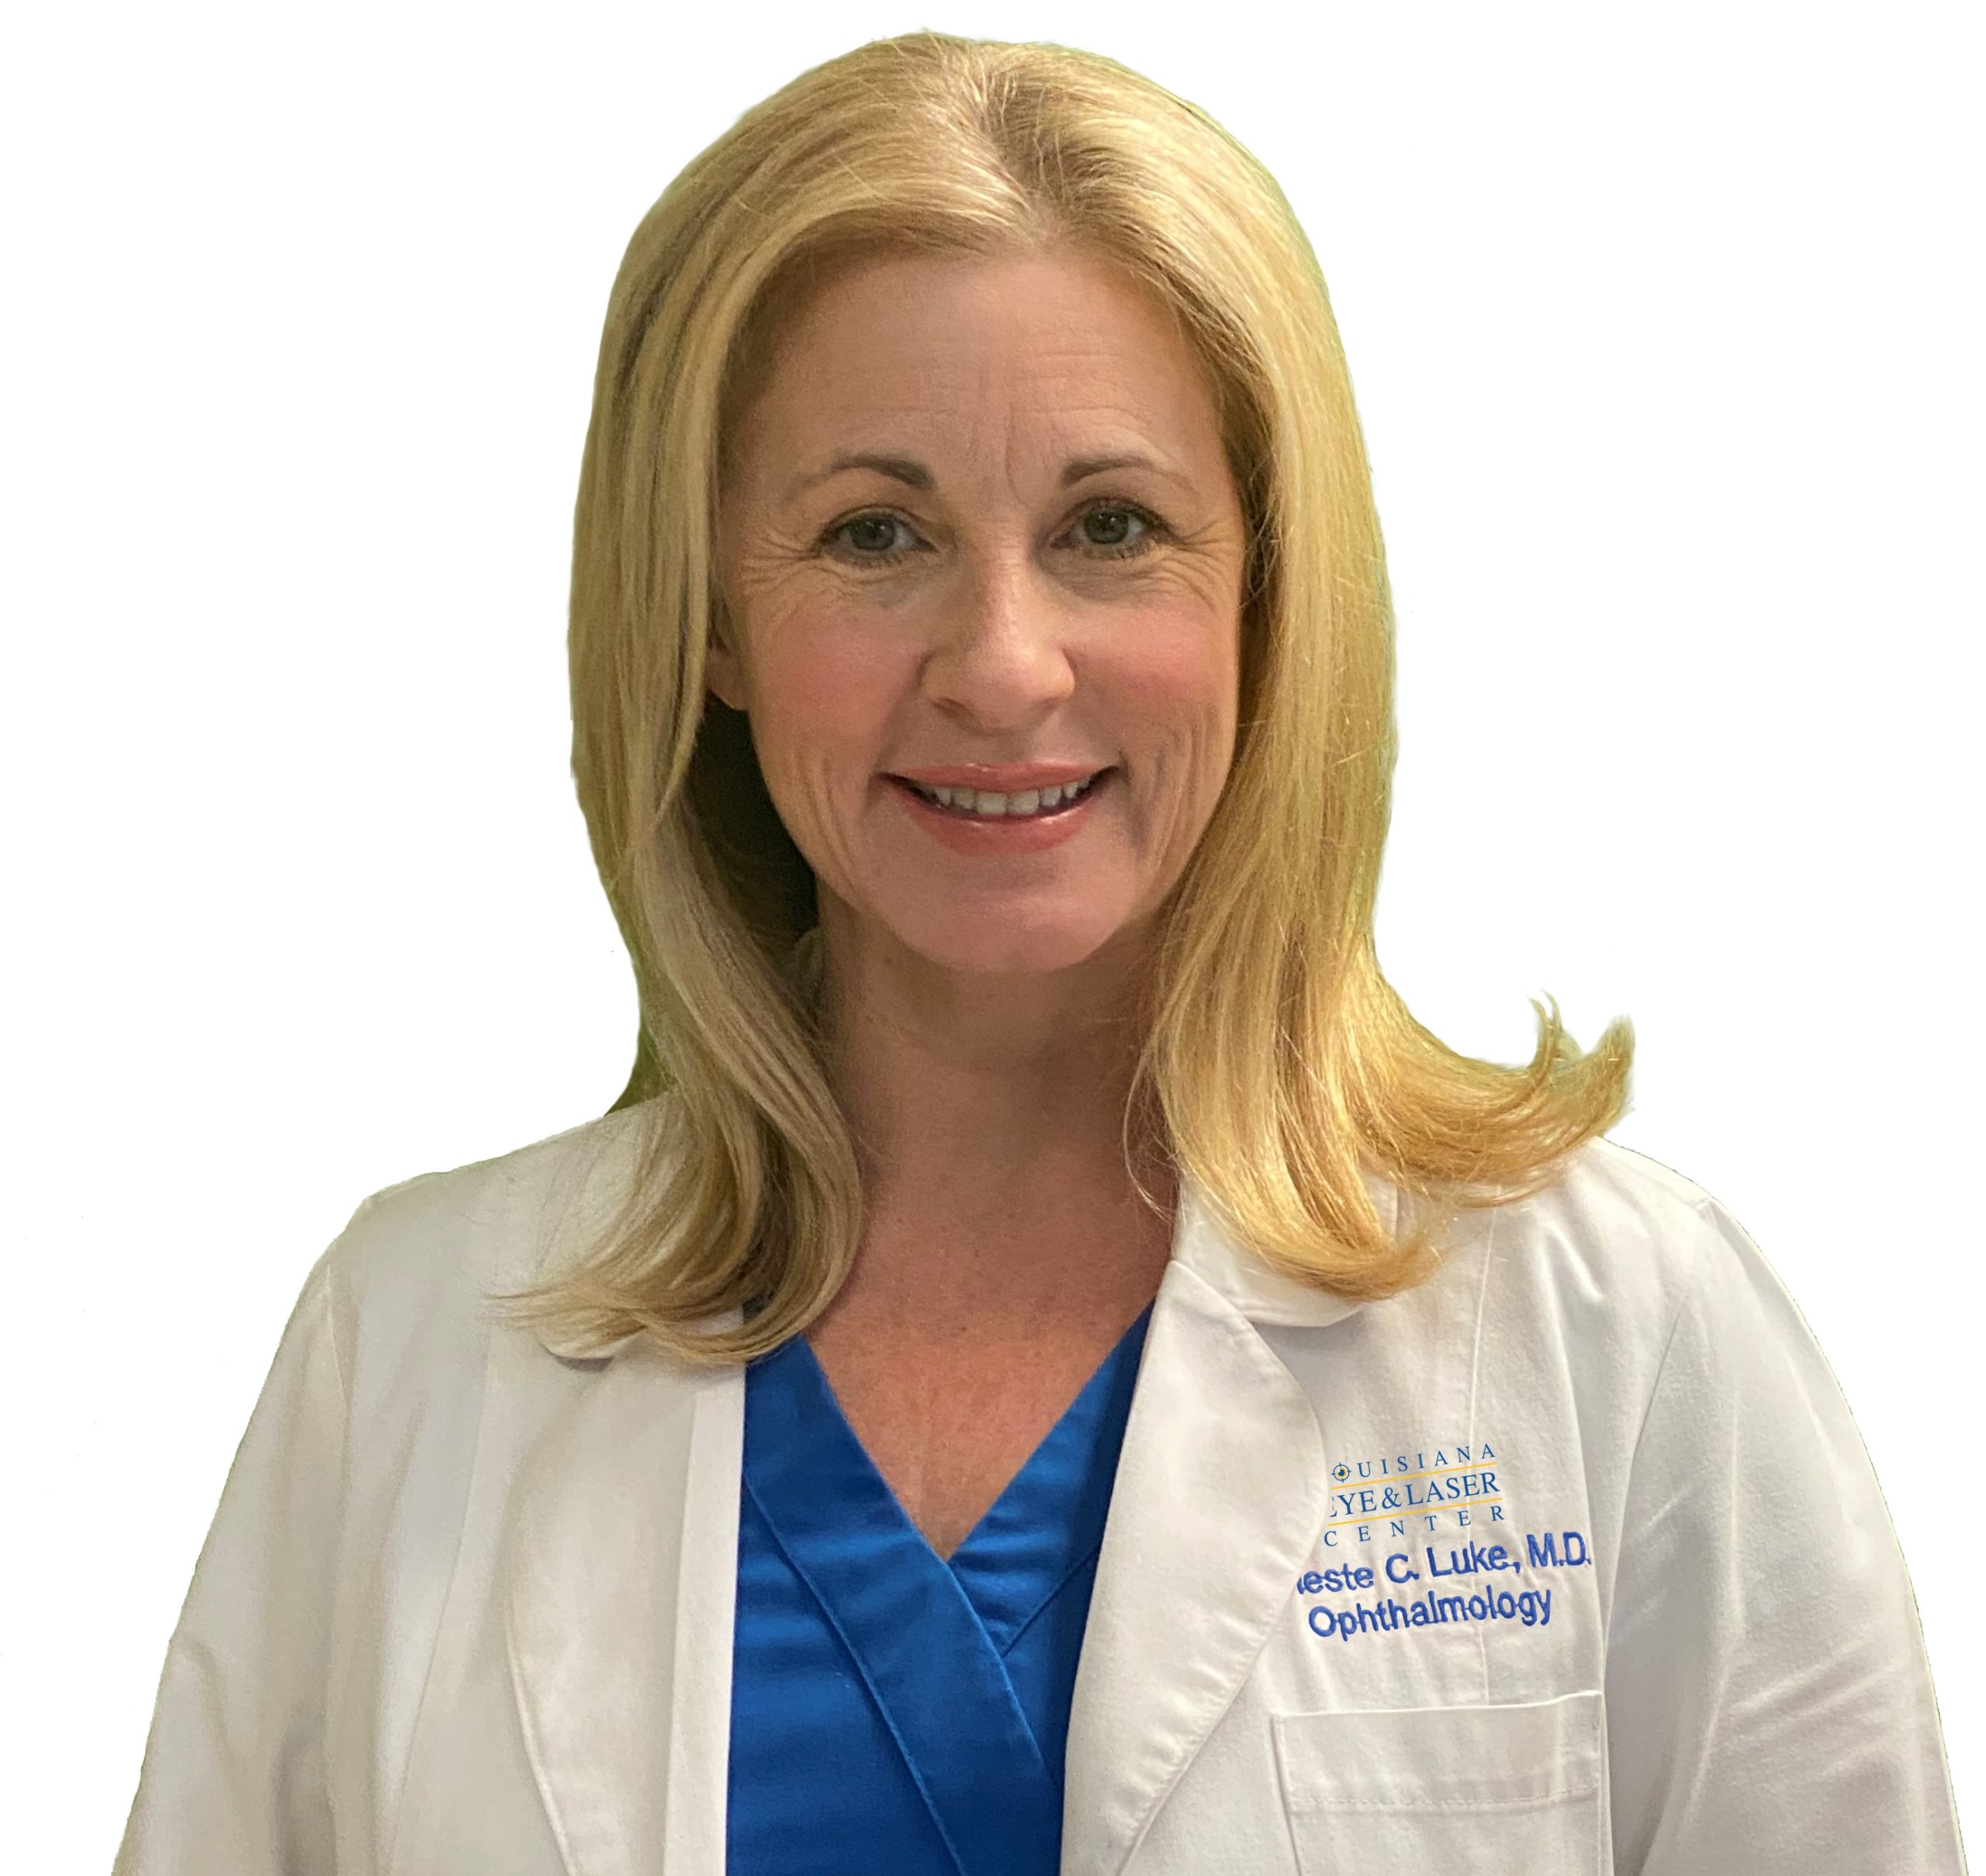 Celeste C. Luke ophthalmologist - Louisiana Eye Care